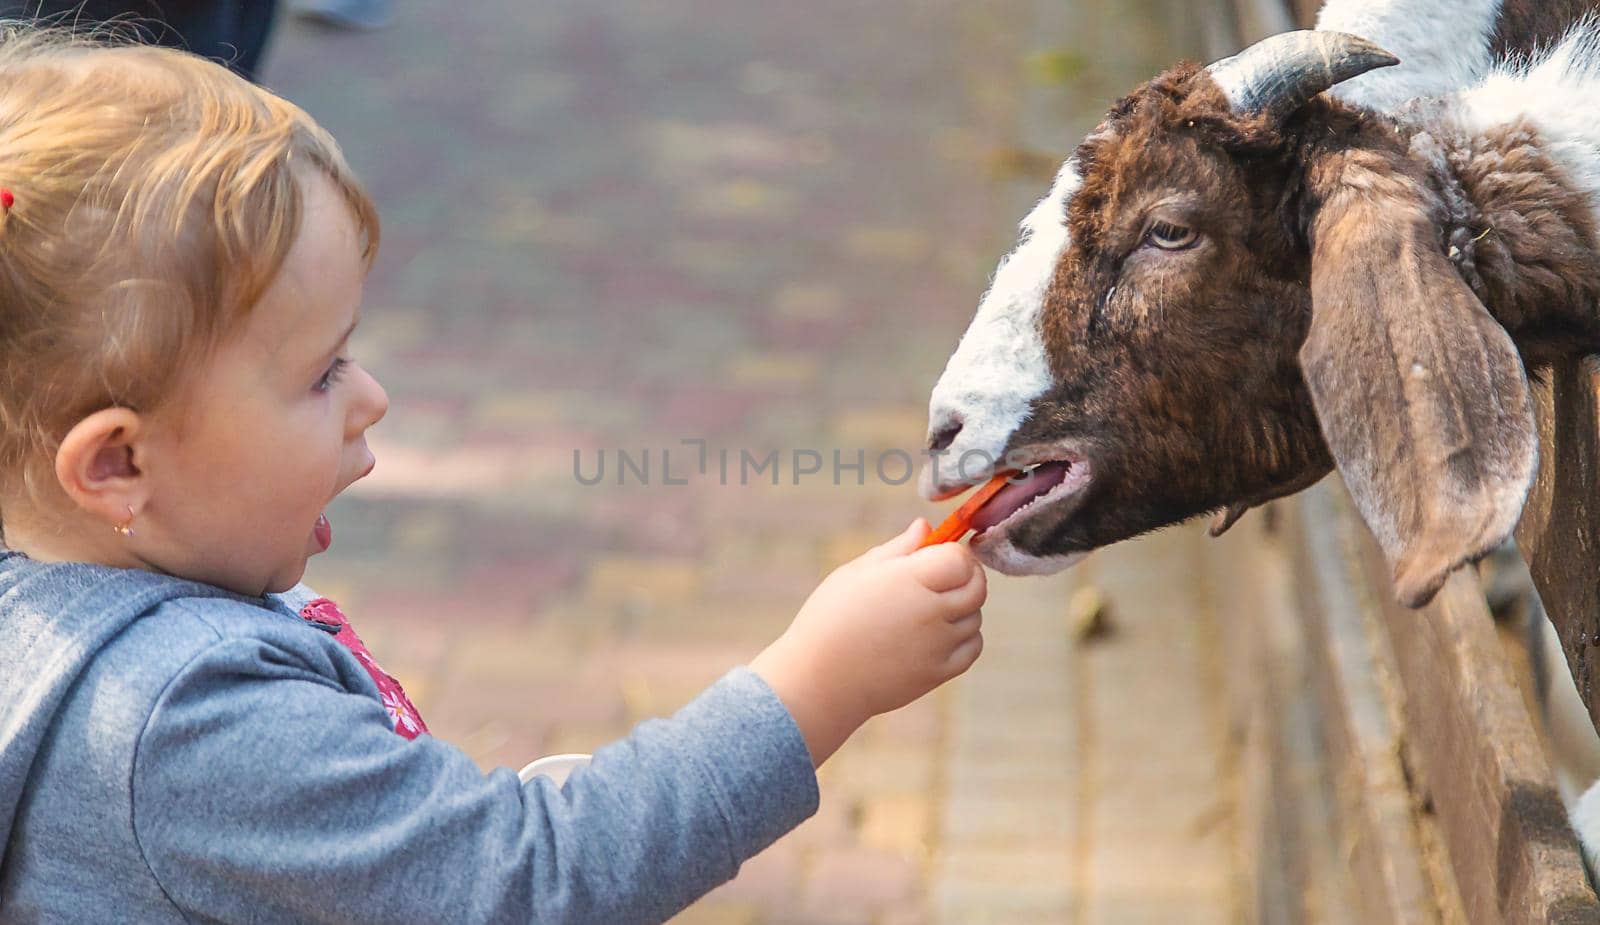 A child feeds a goat on a farm. Selective focus. Kid.